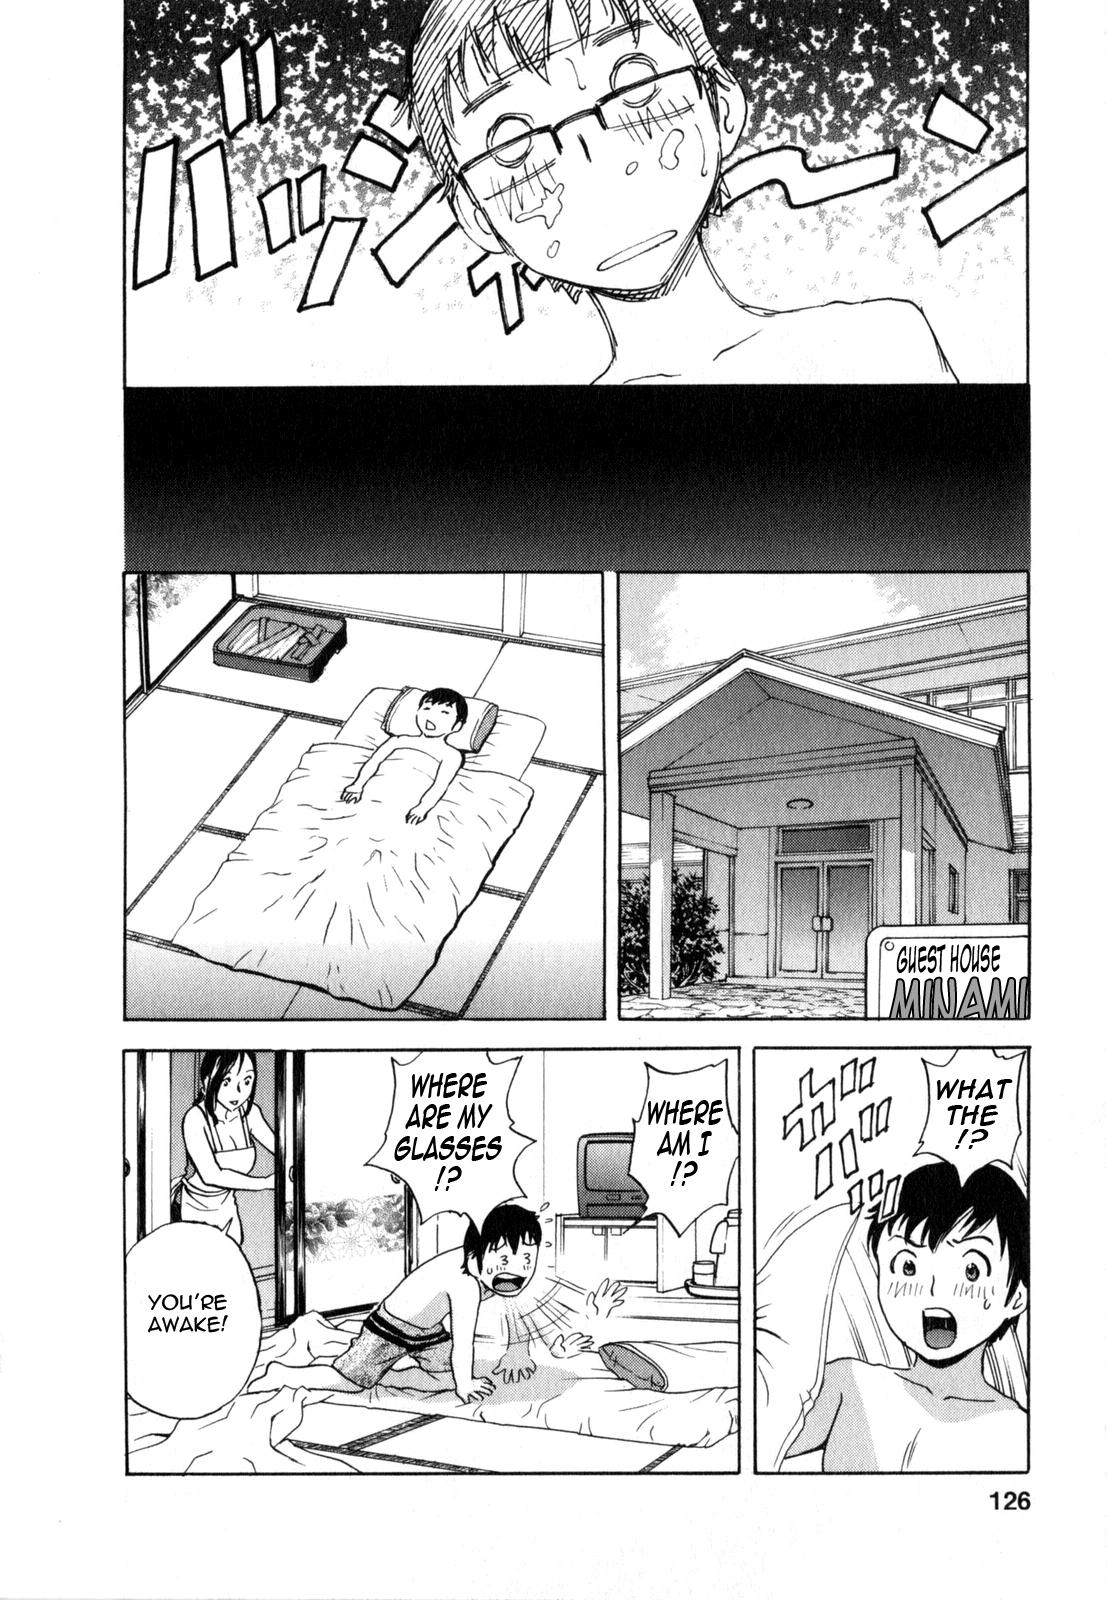 [Hidemaru] Life with Married Women Just Like a Manga 2 - Ch. 1-8 [English] {Tadanohito} 131